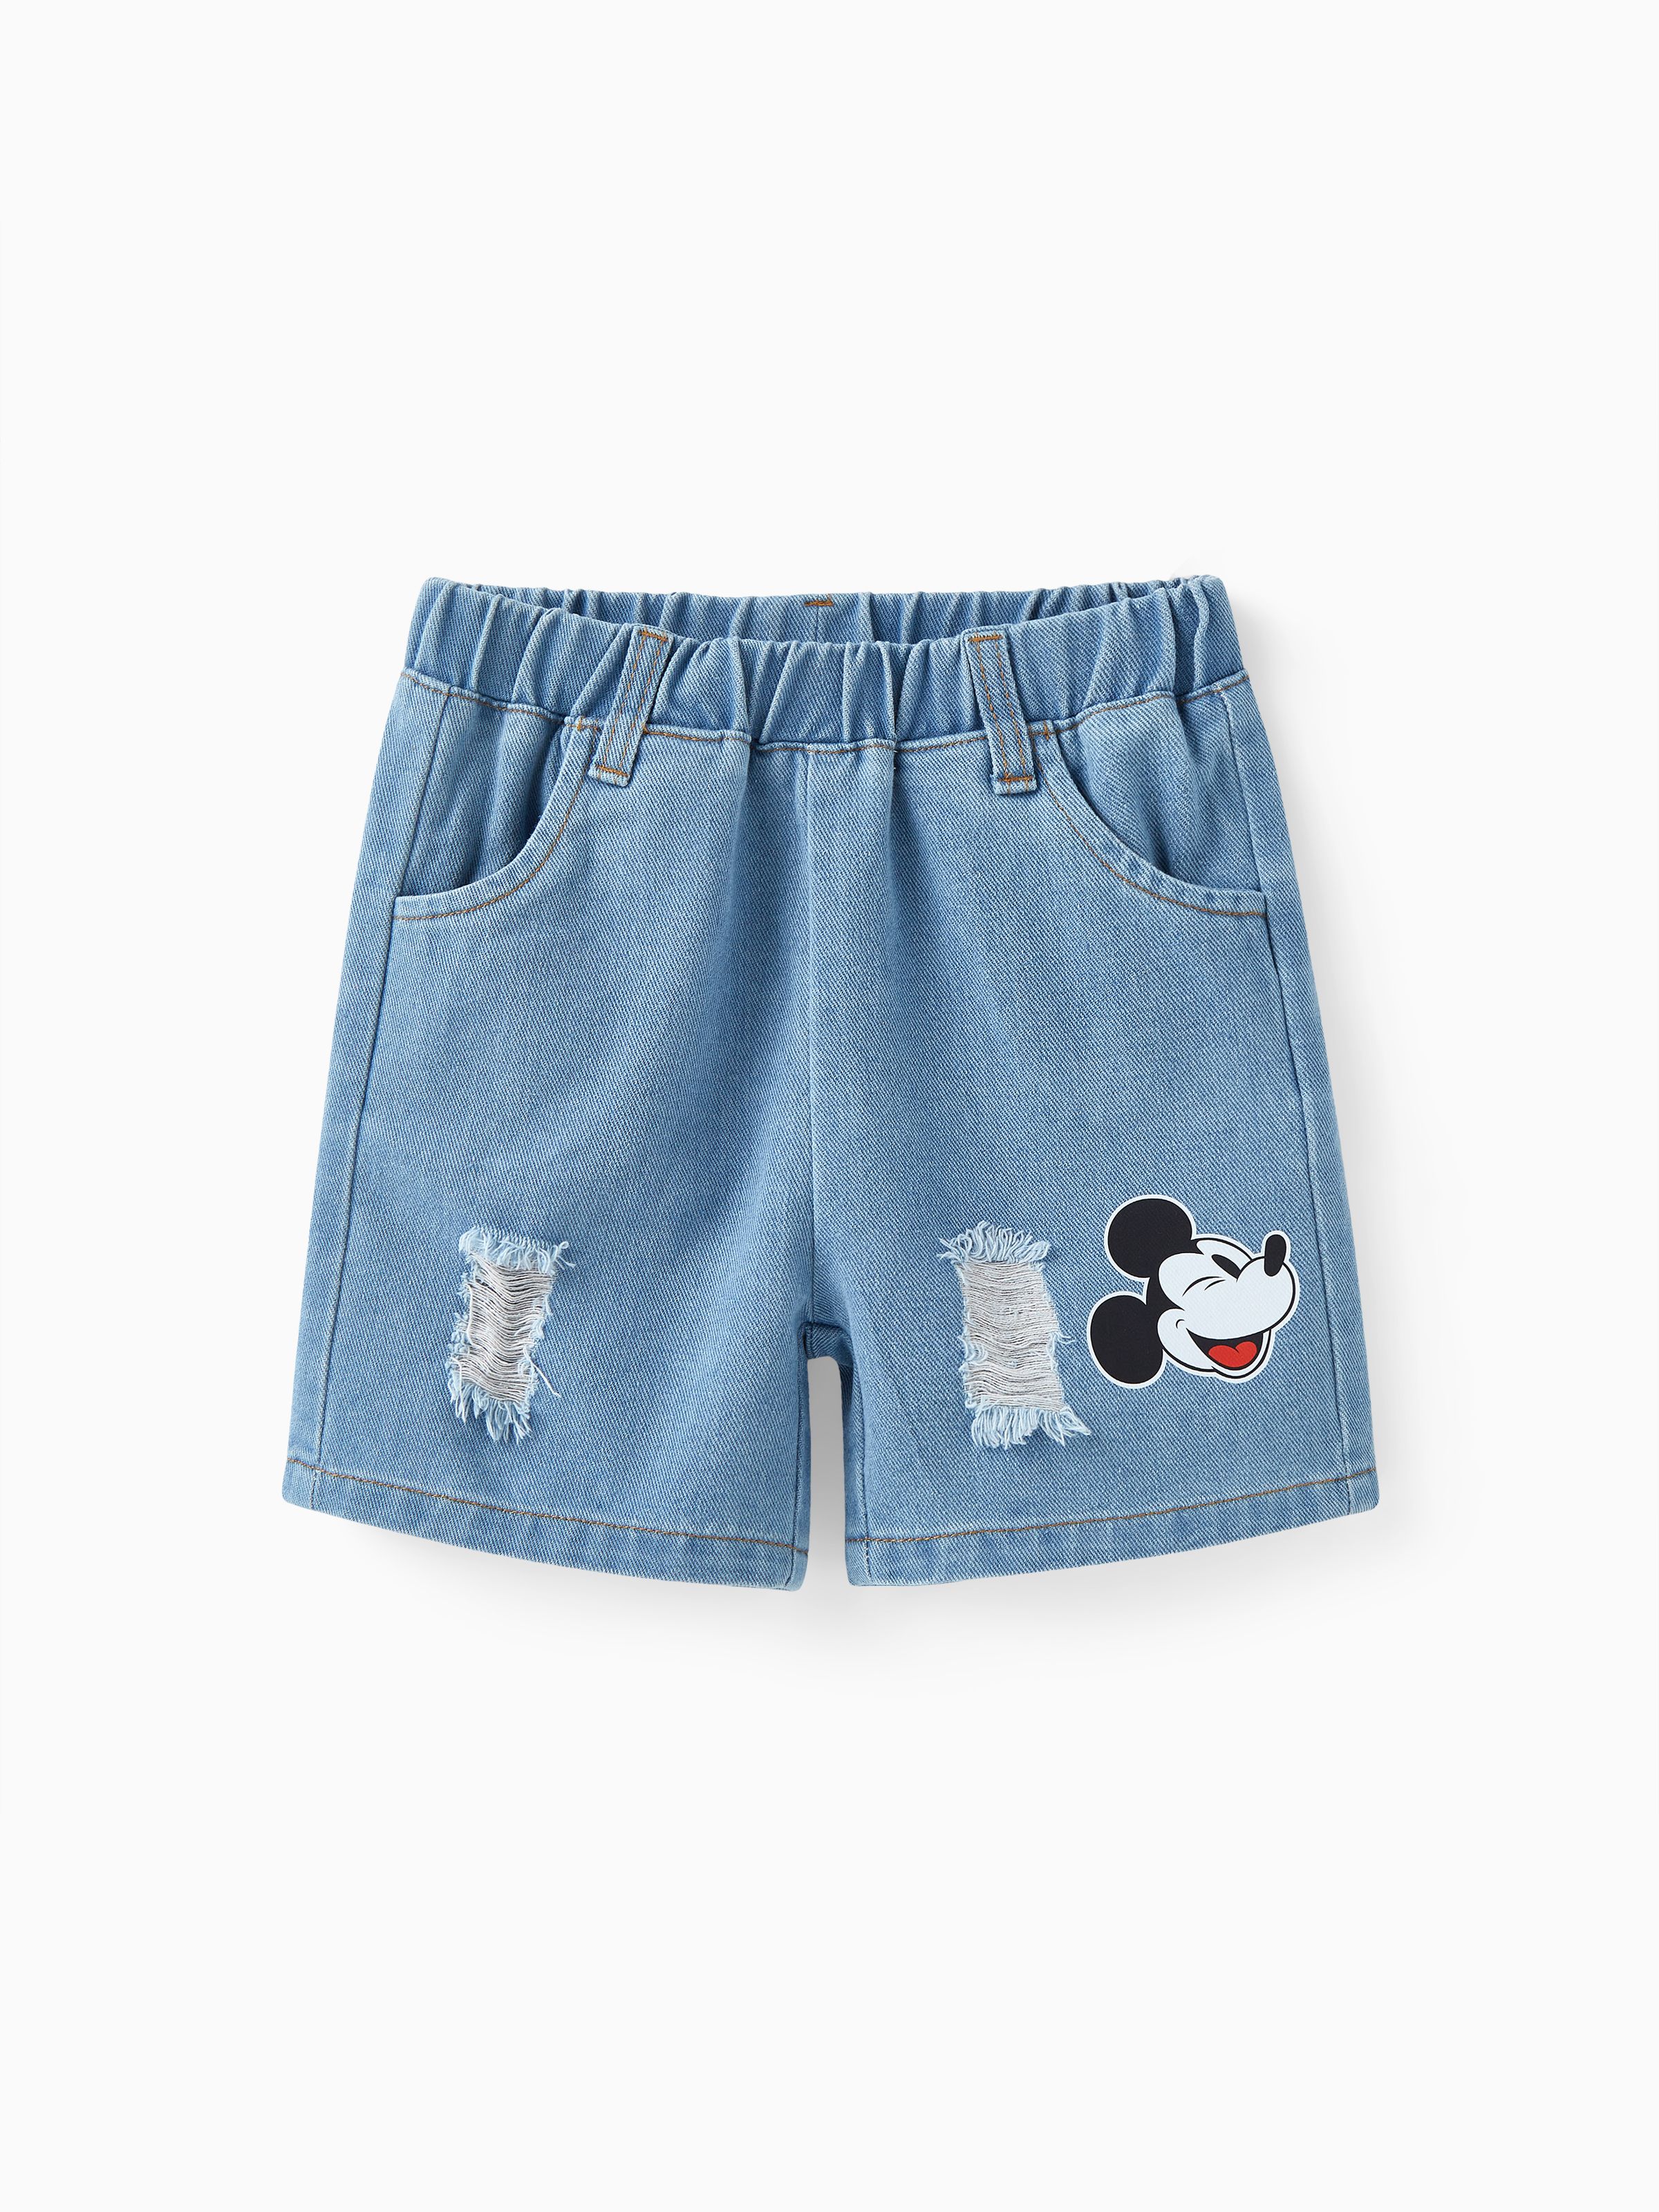 

Disney Mickey and Friends Toddler Girl /Toddler Boy printed denim shorts